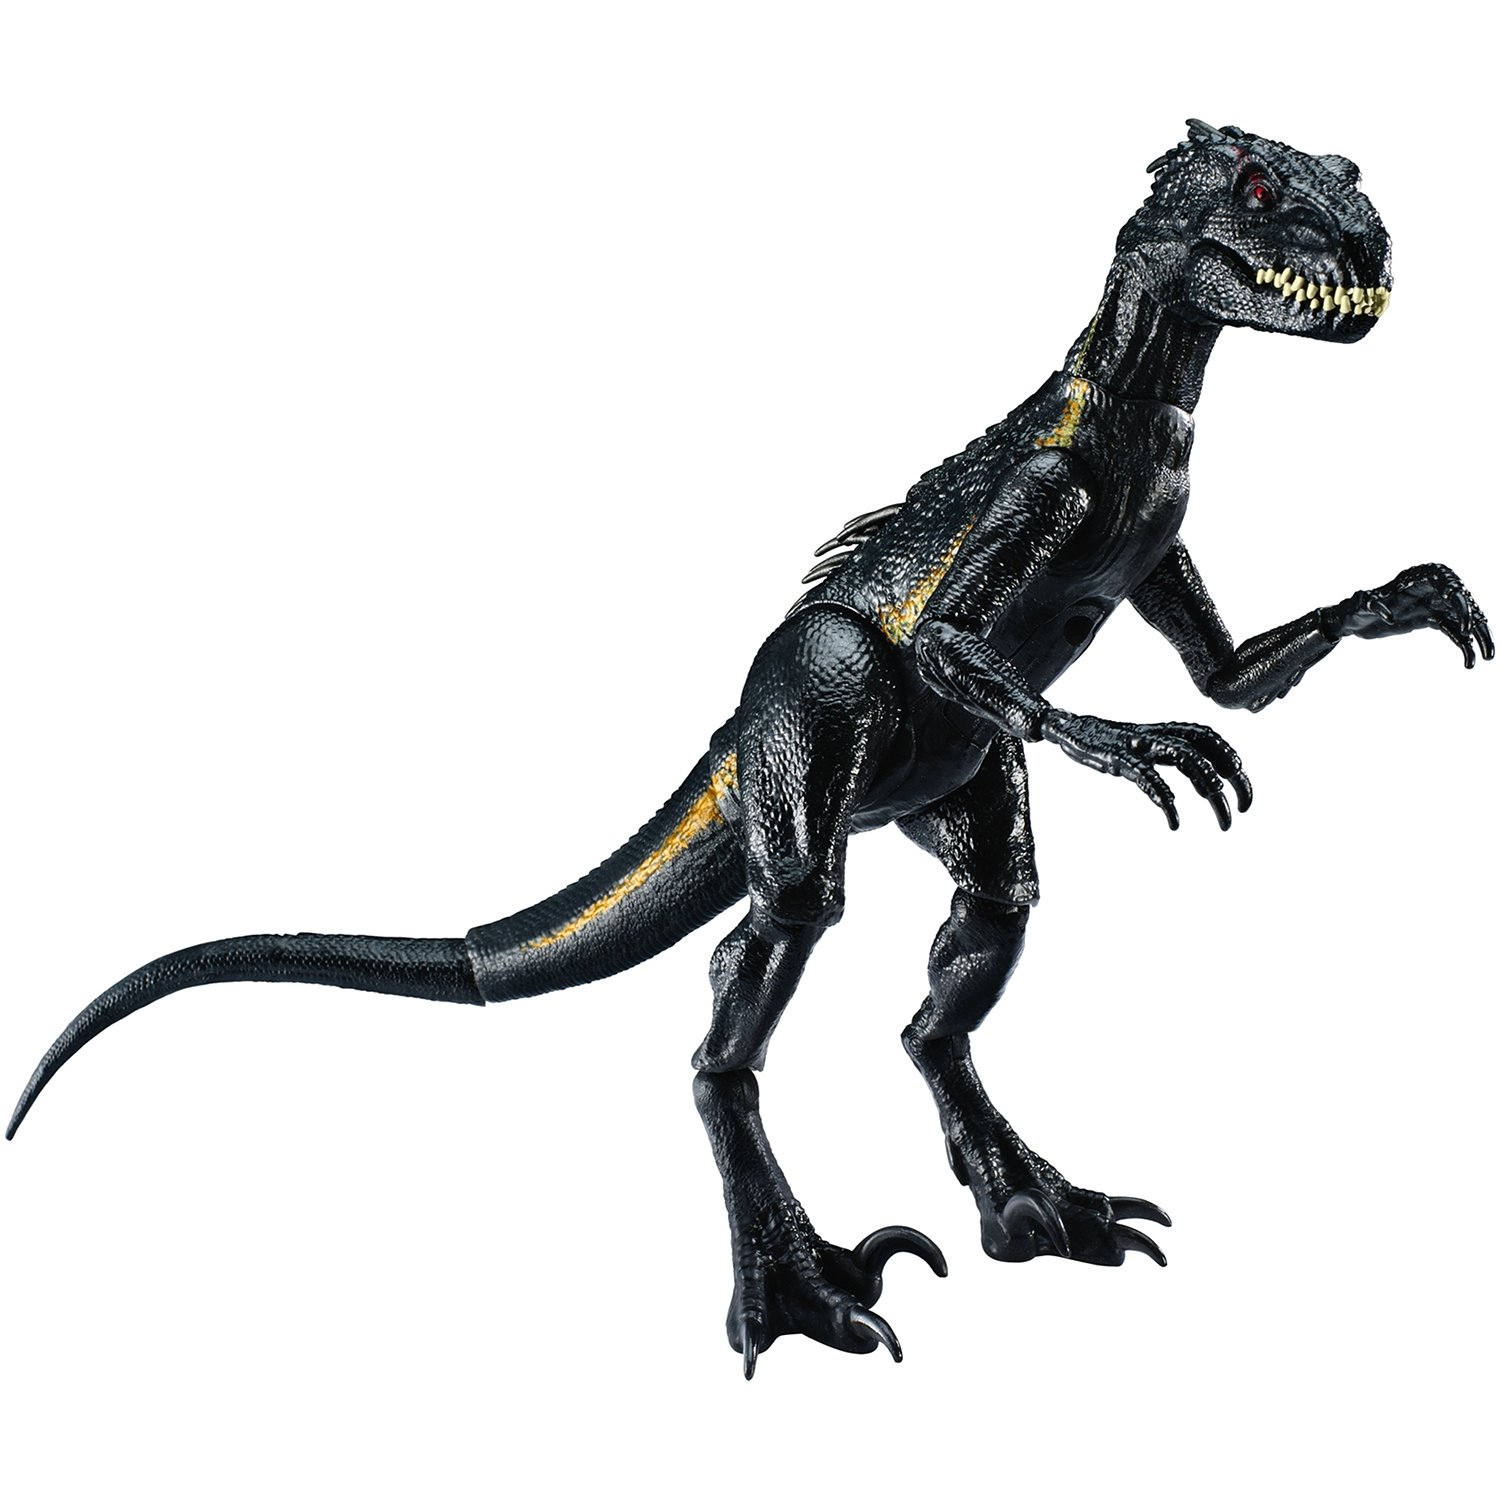 Динозавр из серии Jurassic World® - Индораптор  